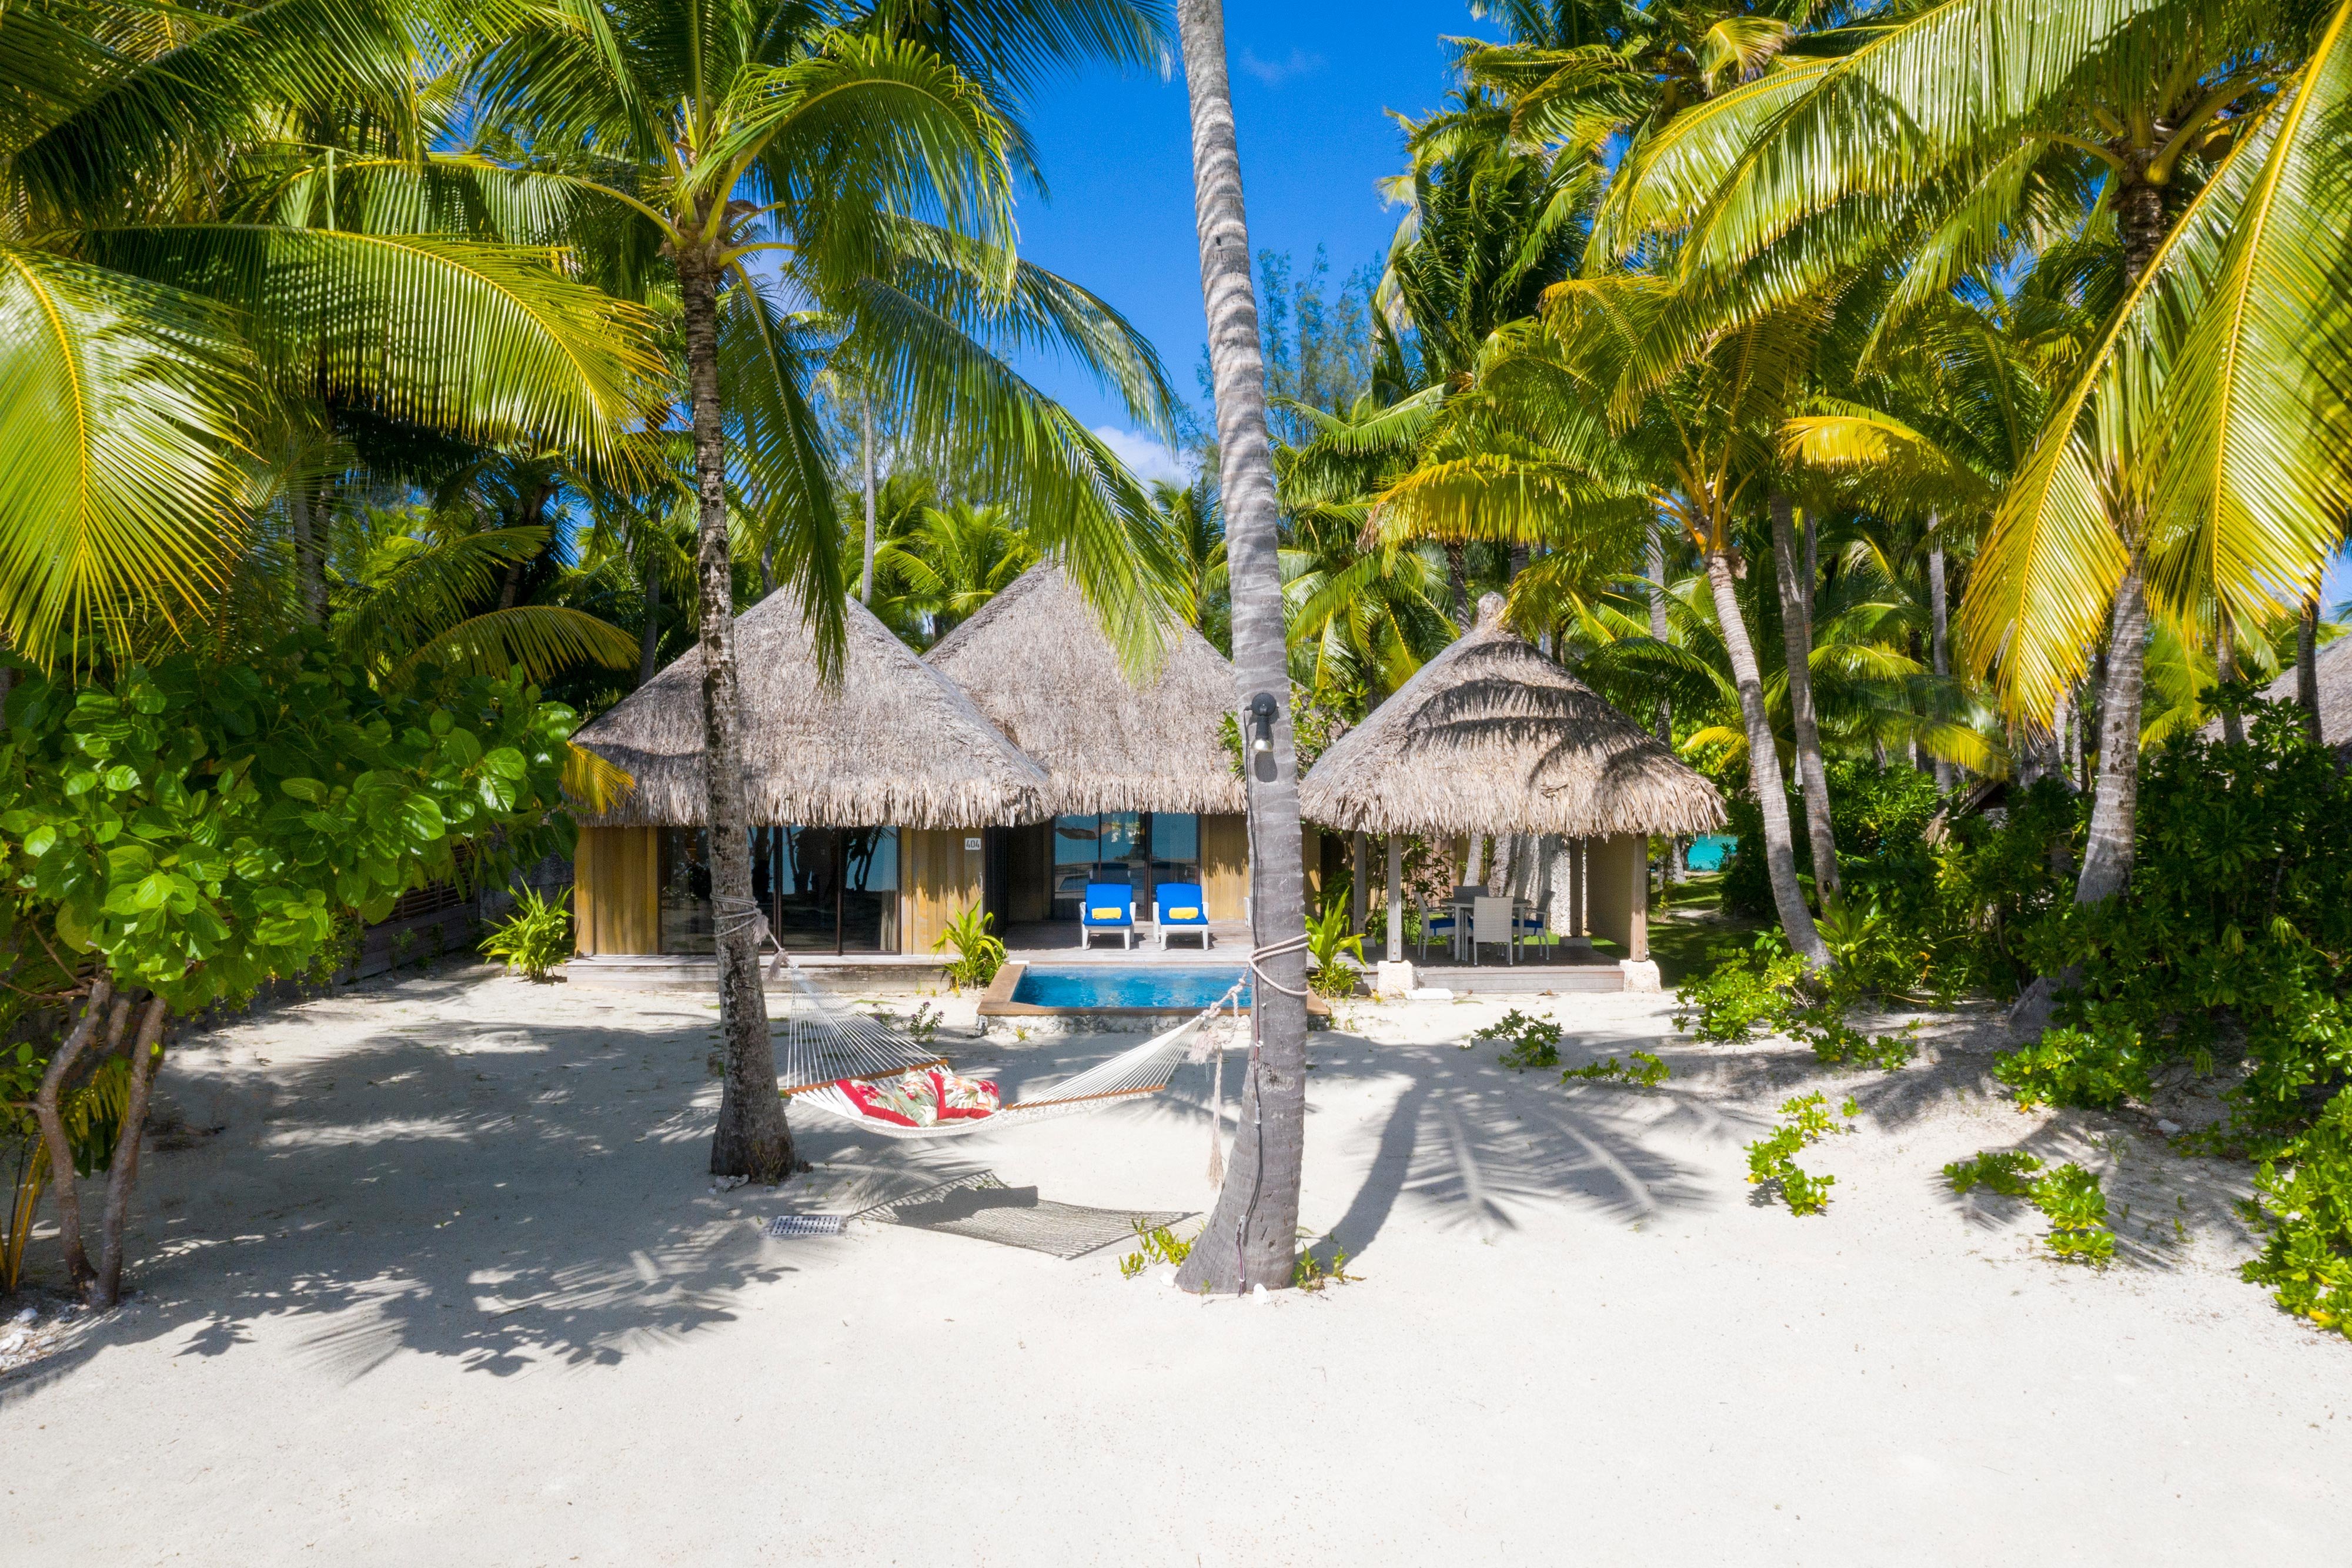 The St Regis Bora Bora Resort Deluxe Bora Bora Society Islands French Polynesia Hotels Gds Reservation Codes Travel Weekly Asia